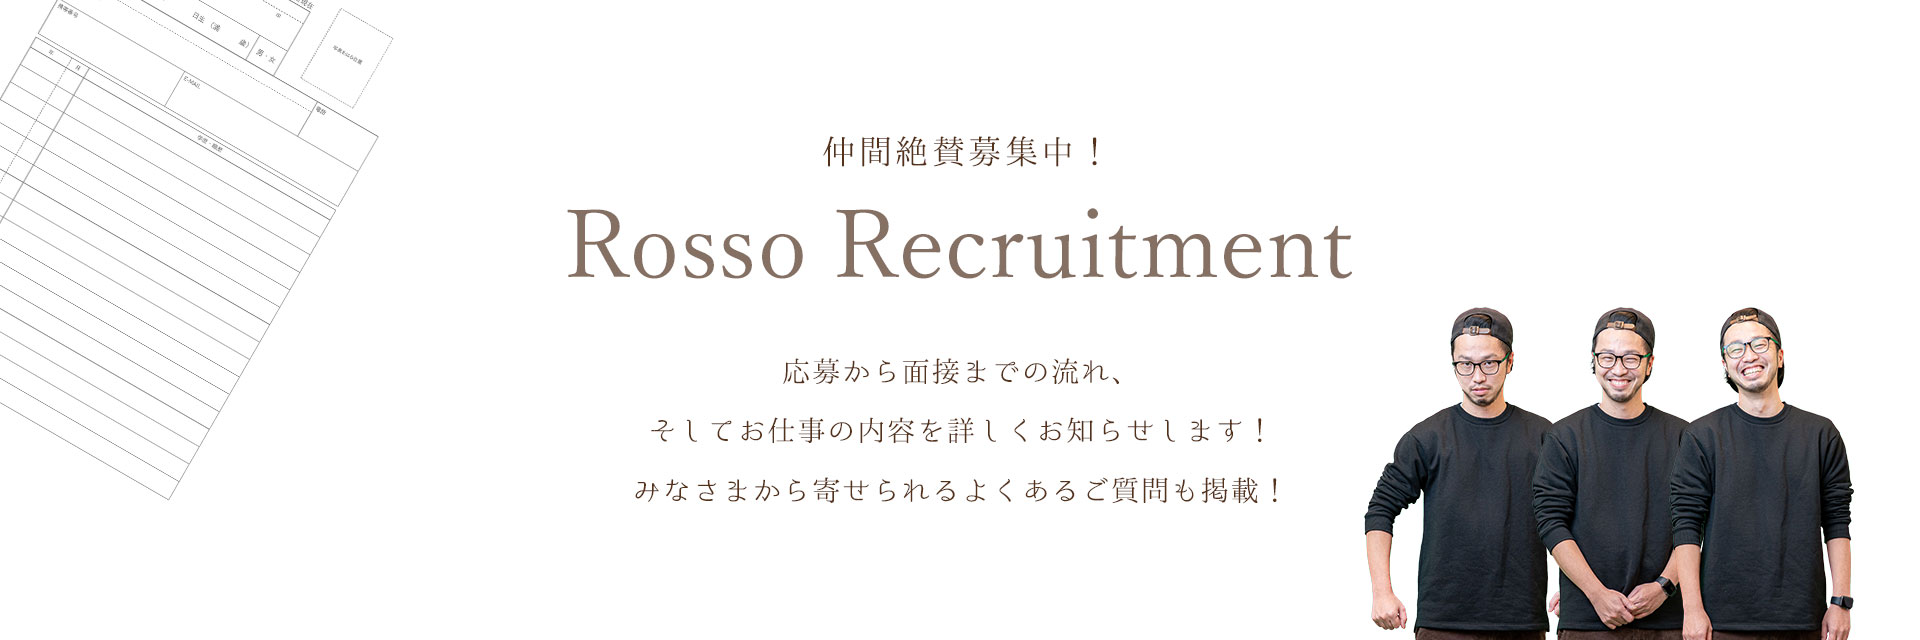 募集要項 Rosso Recruitment